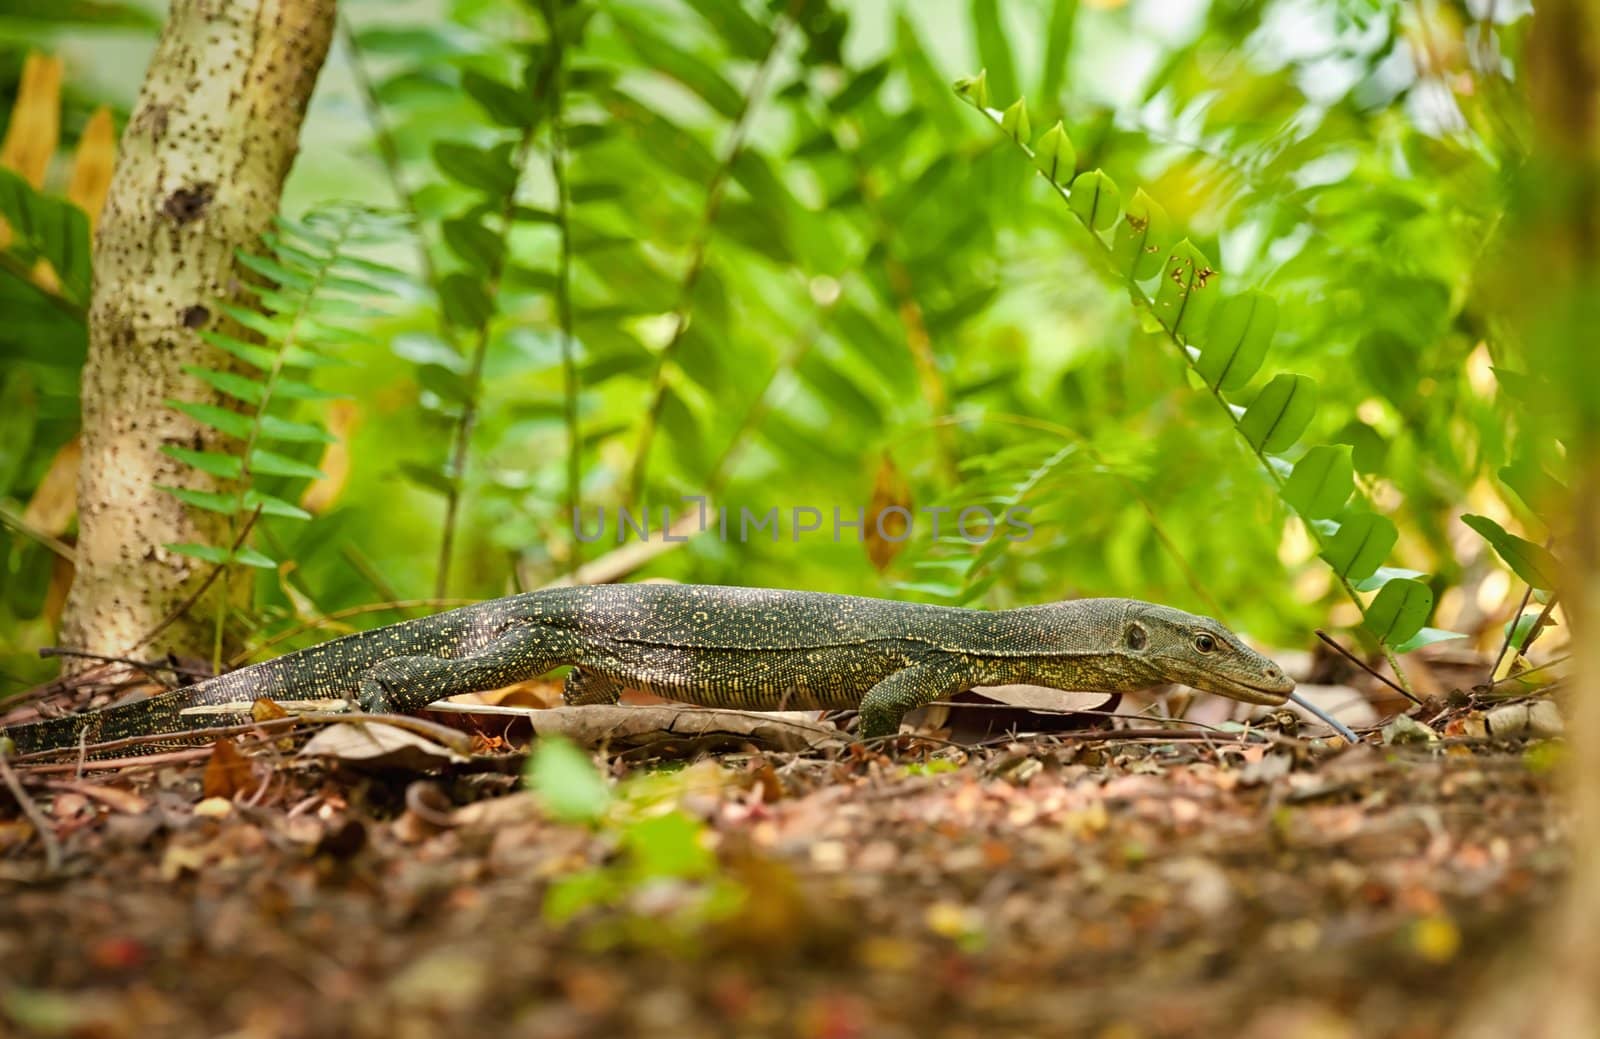 a goanna lizard walks along through the undergrowth